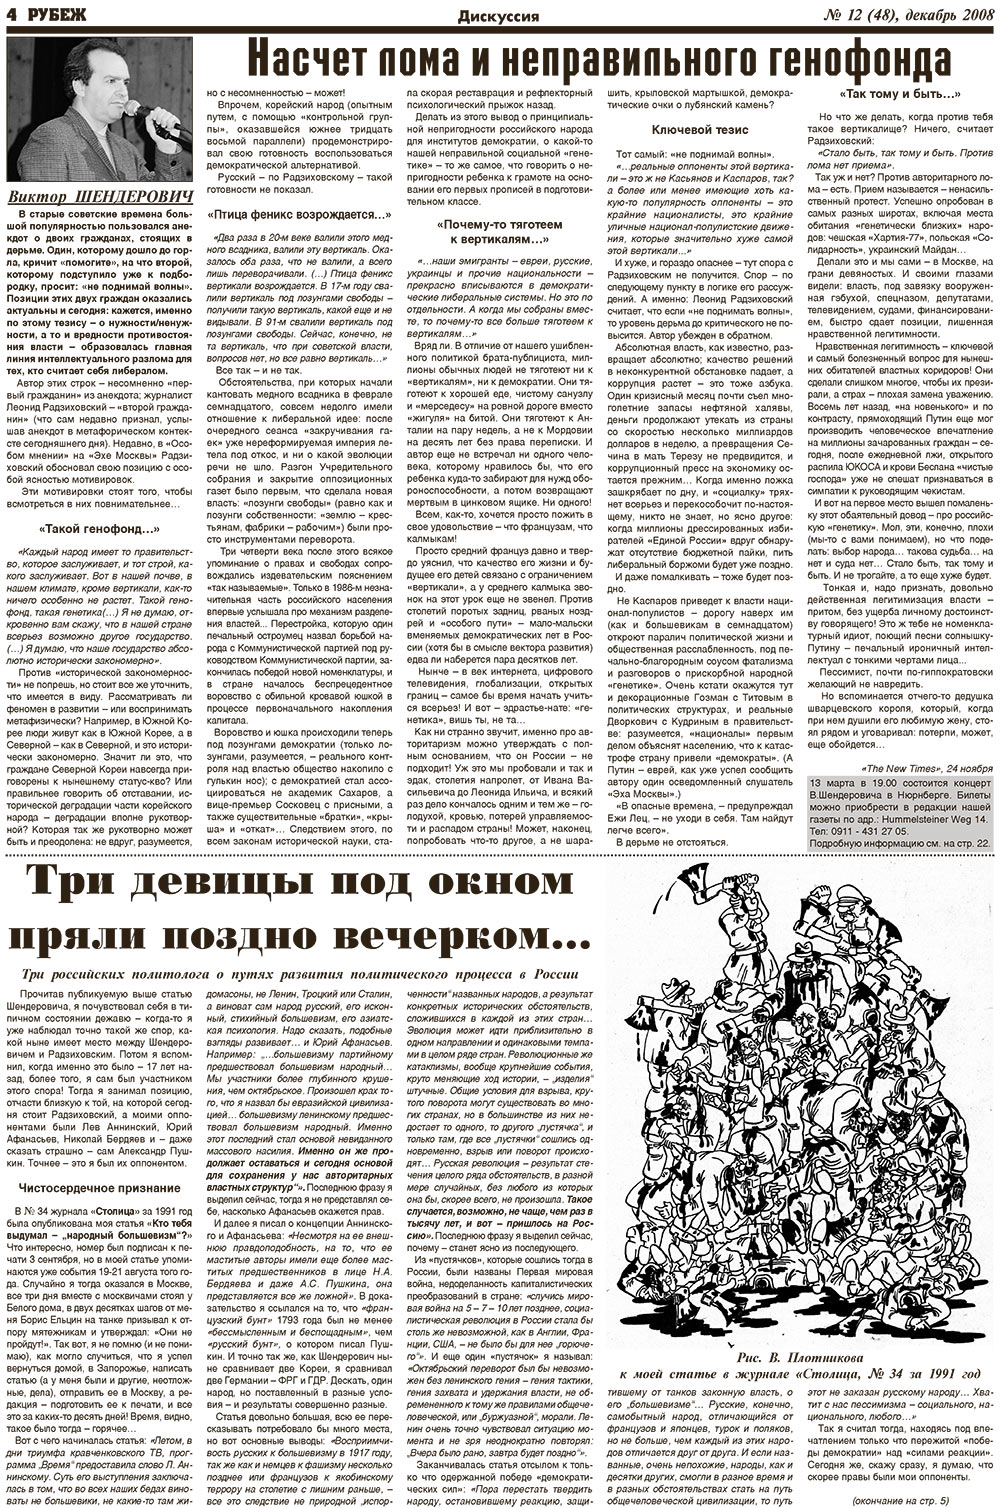 Рубеж, газета. 2008 №12 стр.4